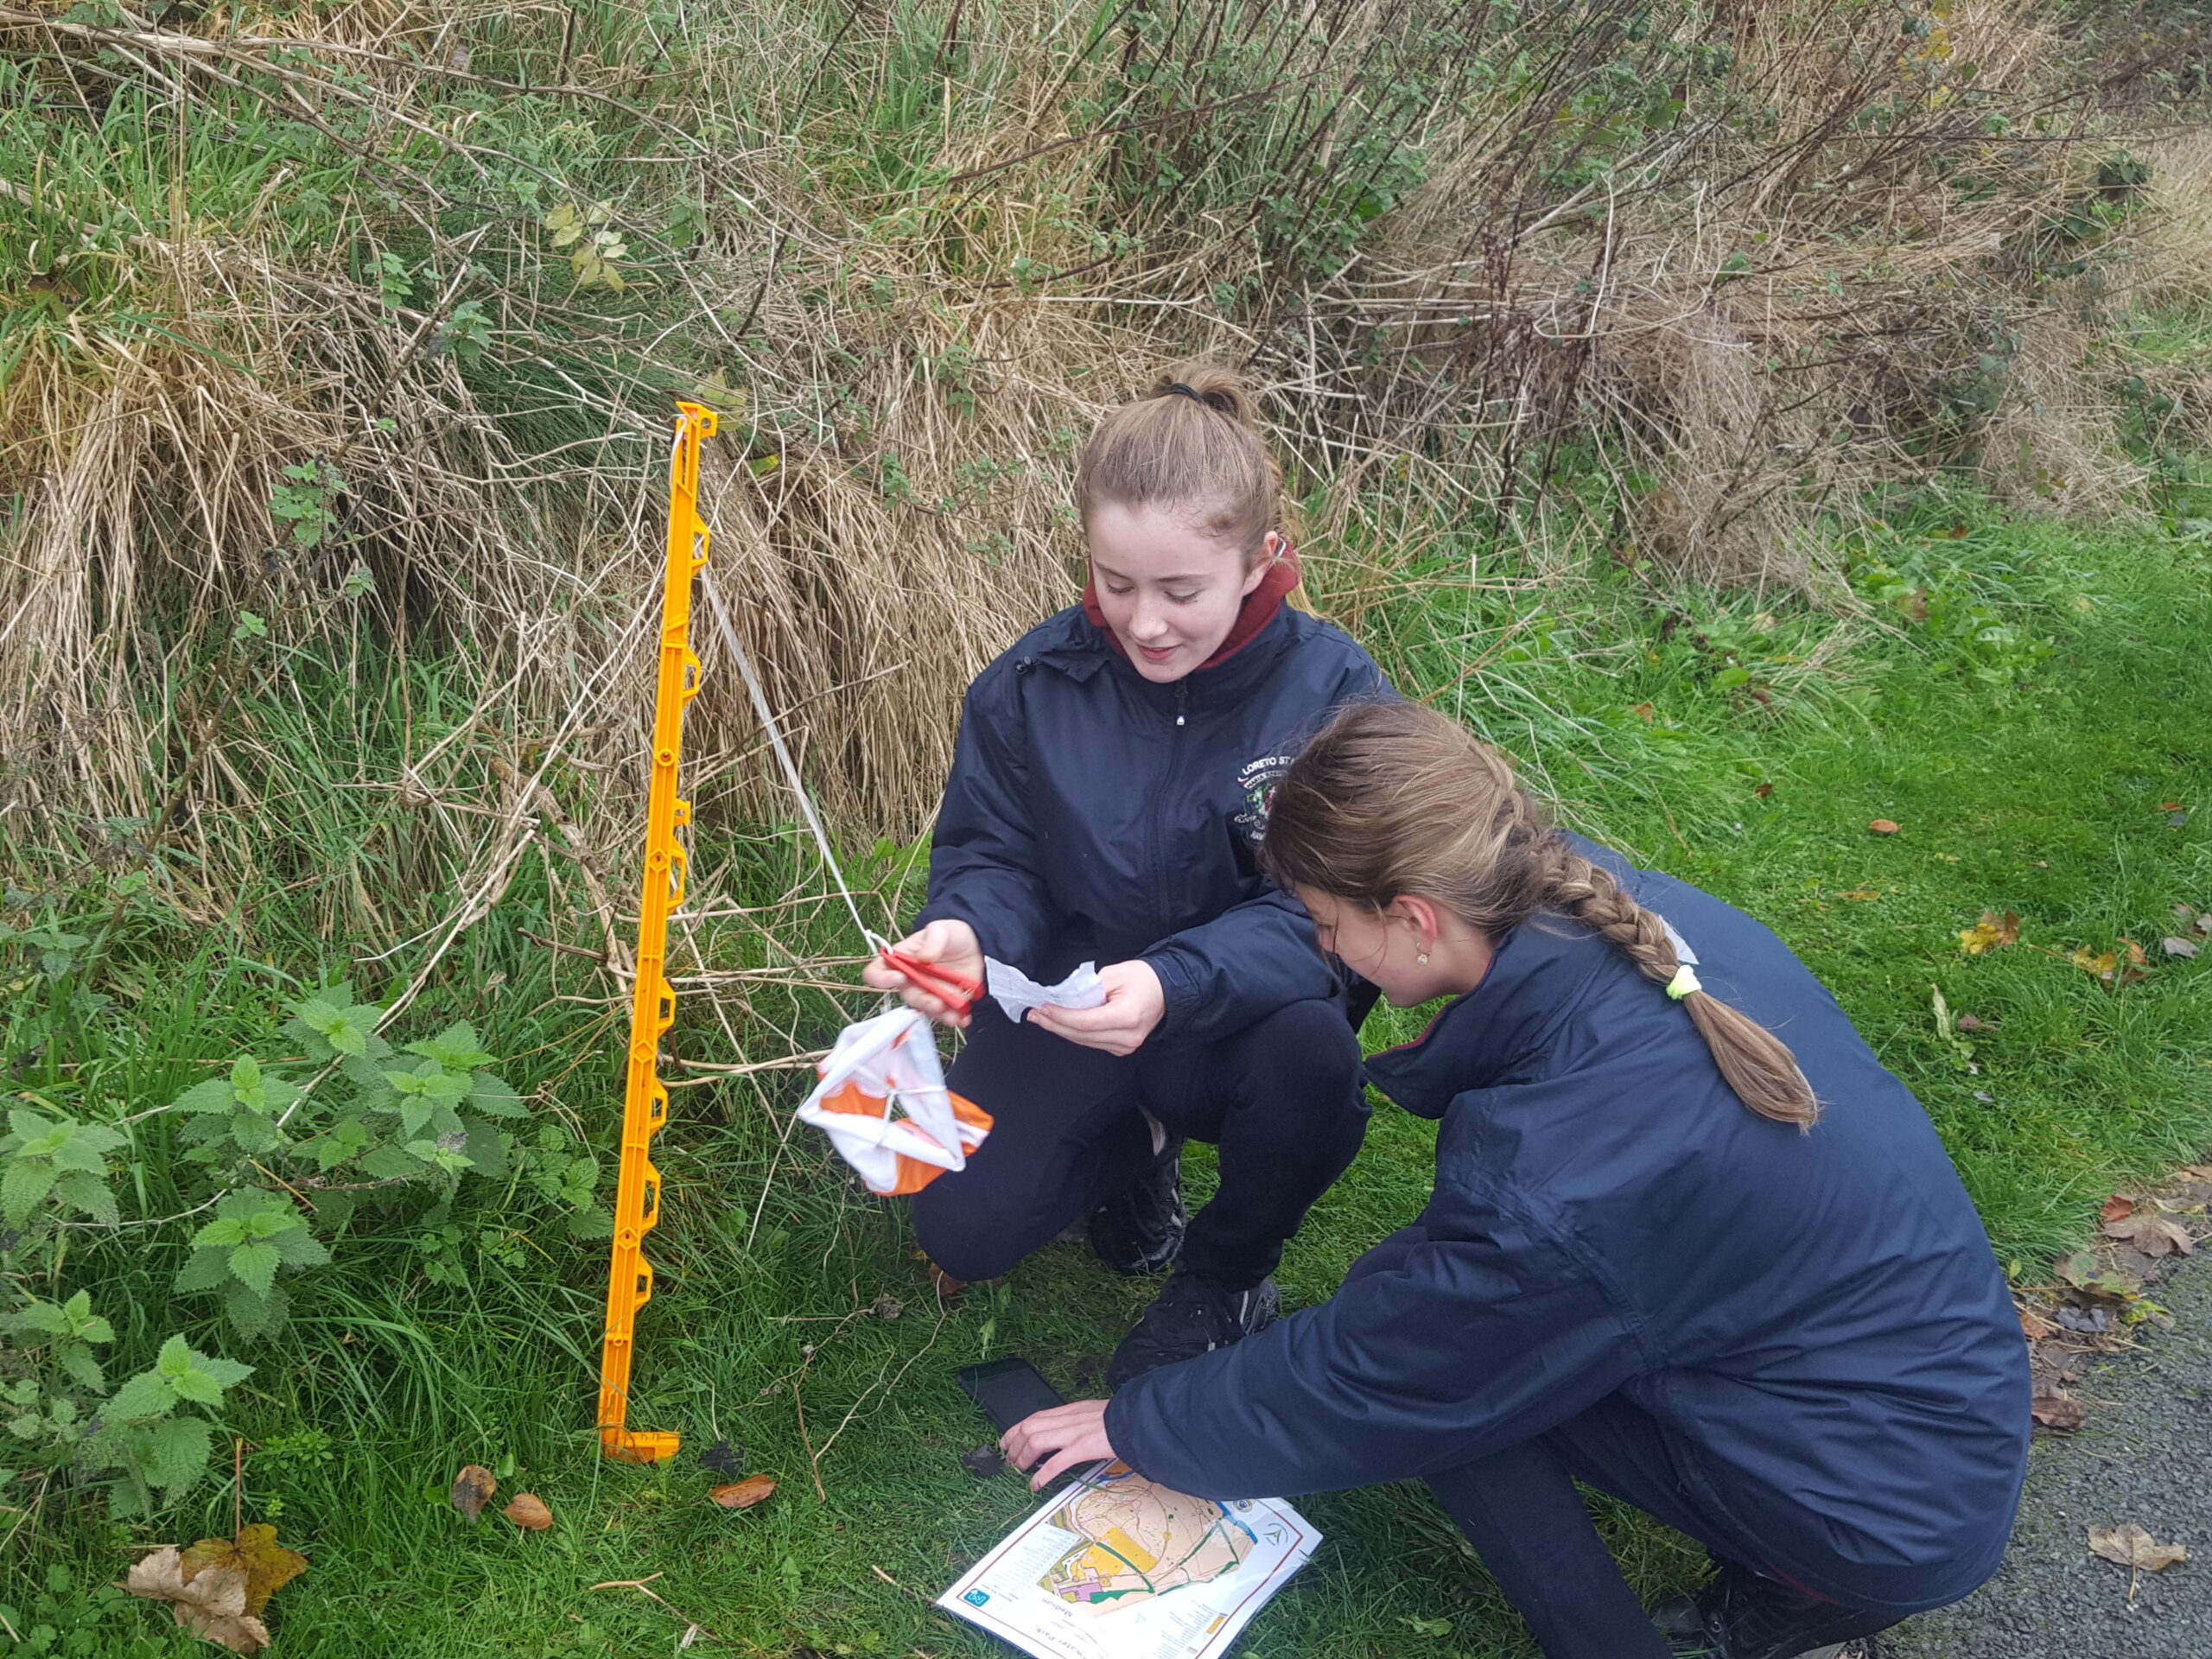 Two girls reading an orienteering map